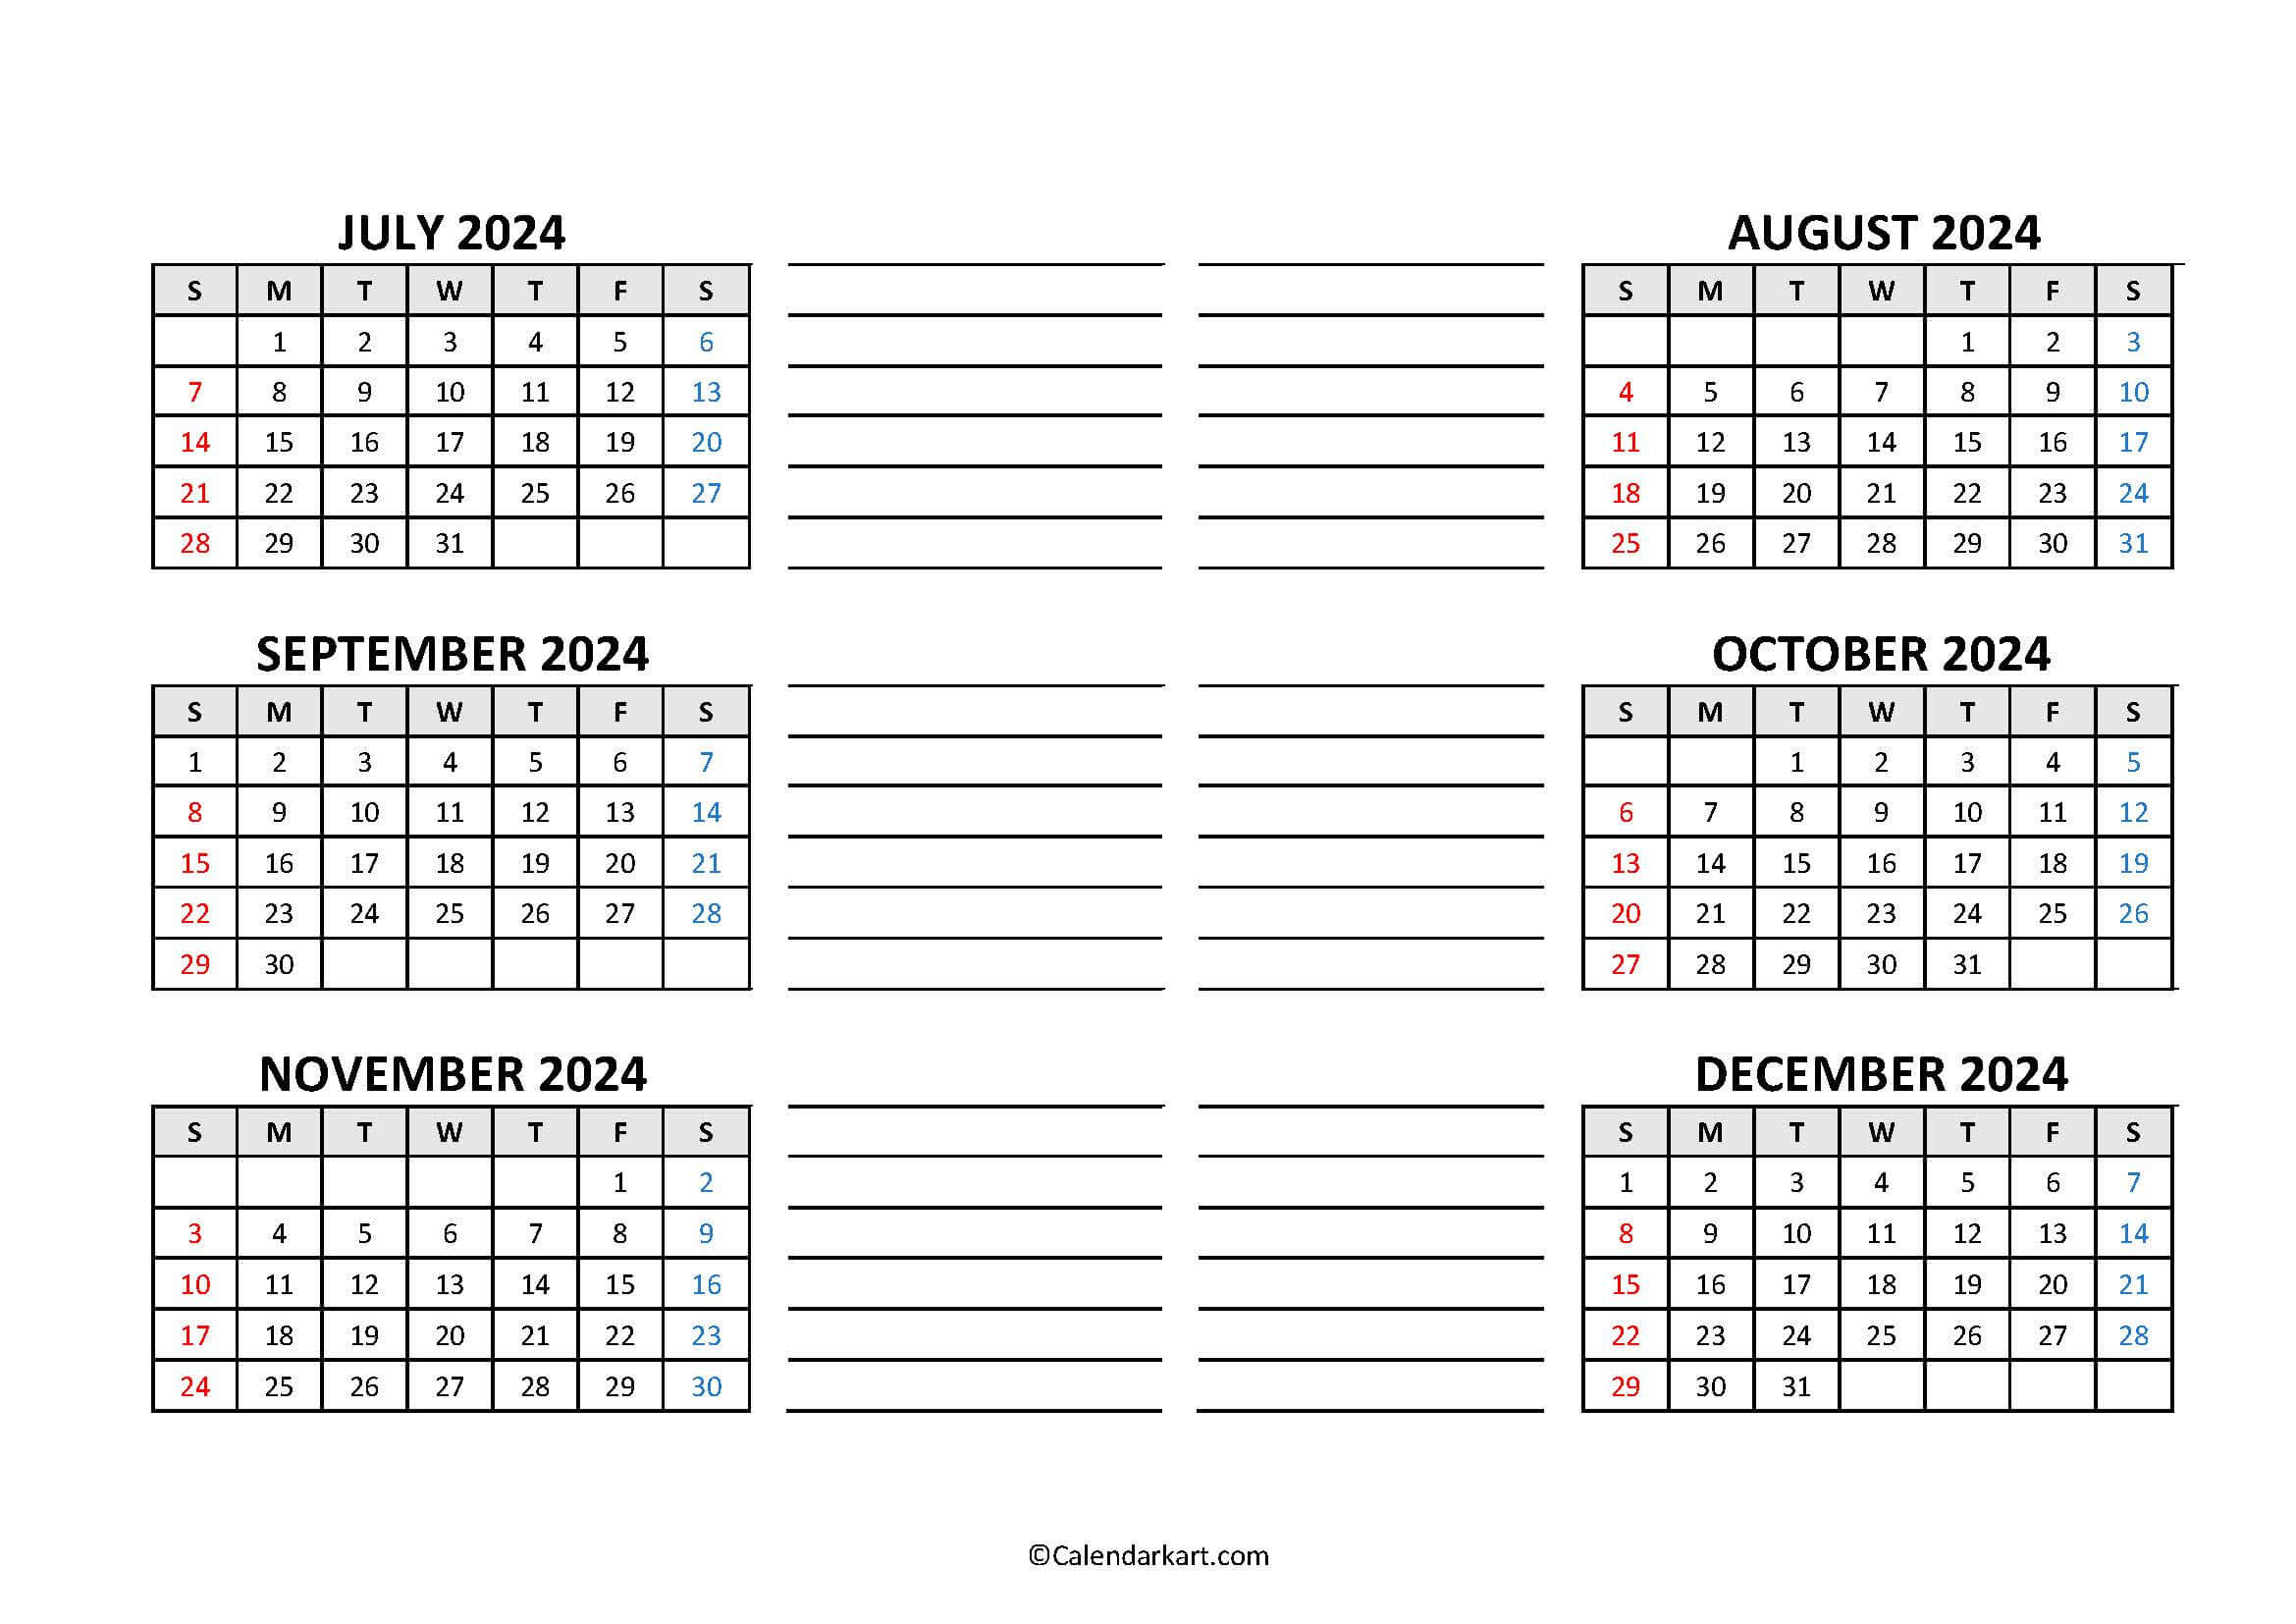 Free Printable Year At A Glance Calendar 2024 - Calendarkart throughout Calendar July - December 2024